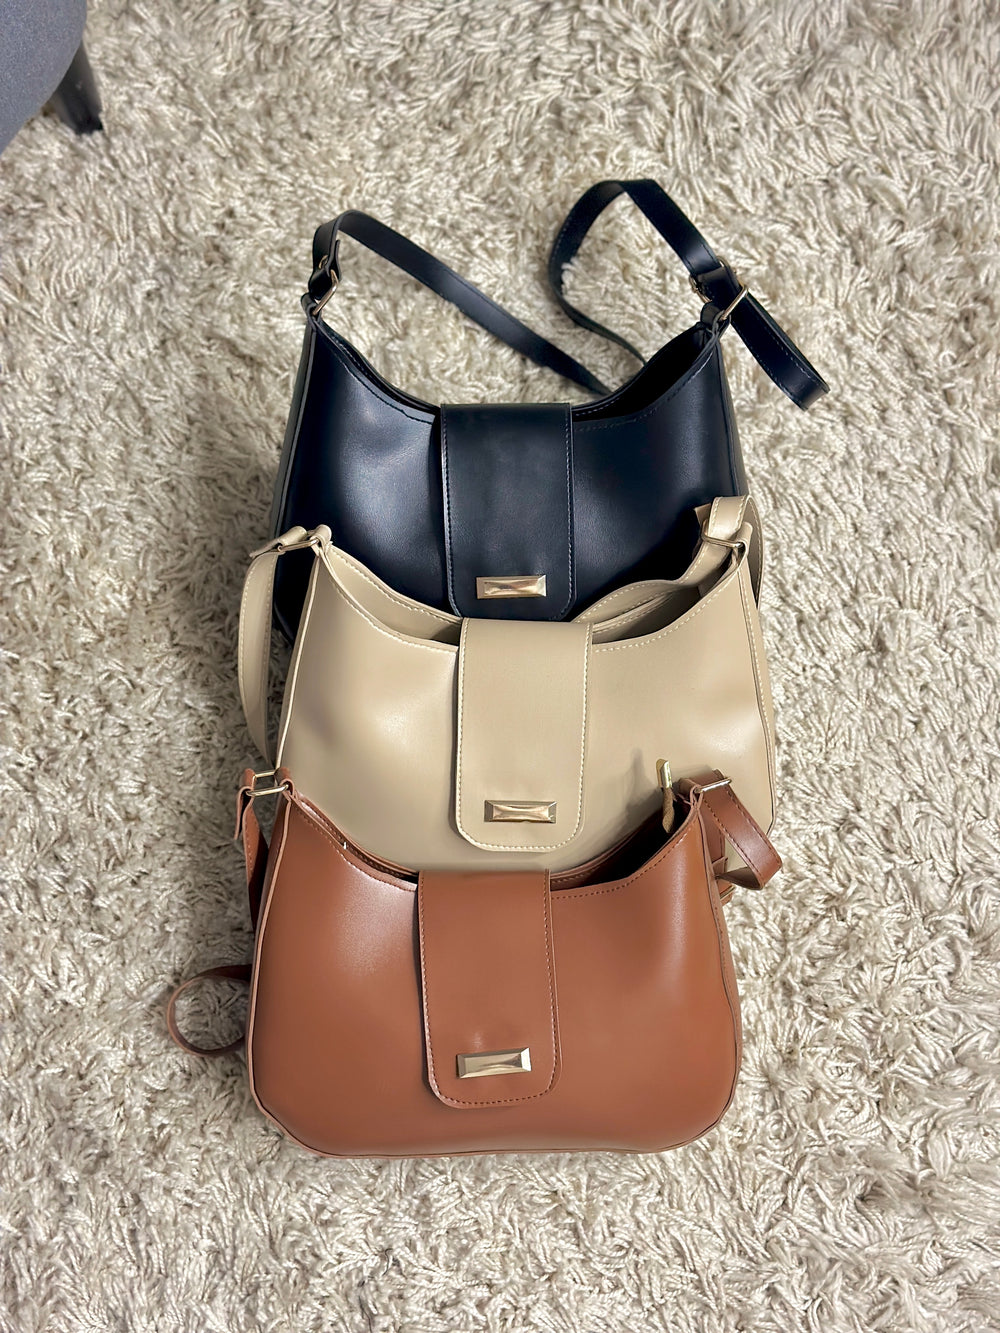 Black French-core Adjustable Strap Handbag